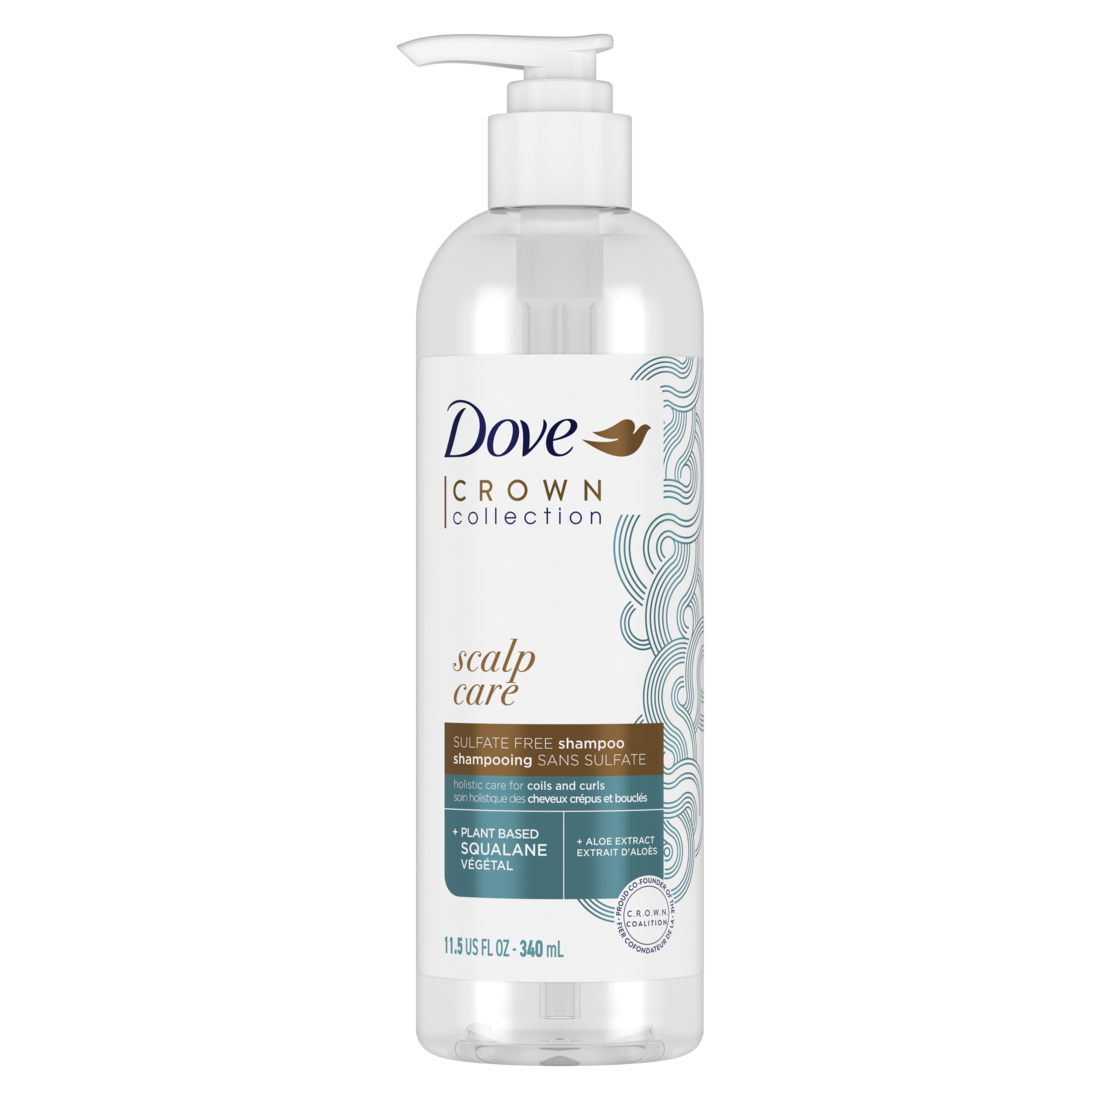 Dove CROWN Collection Scalp Care Shampoo 340ml